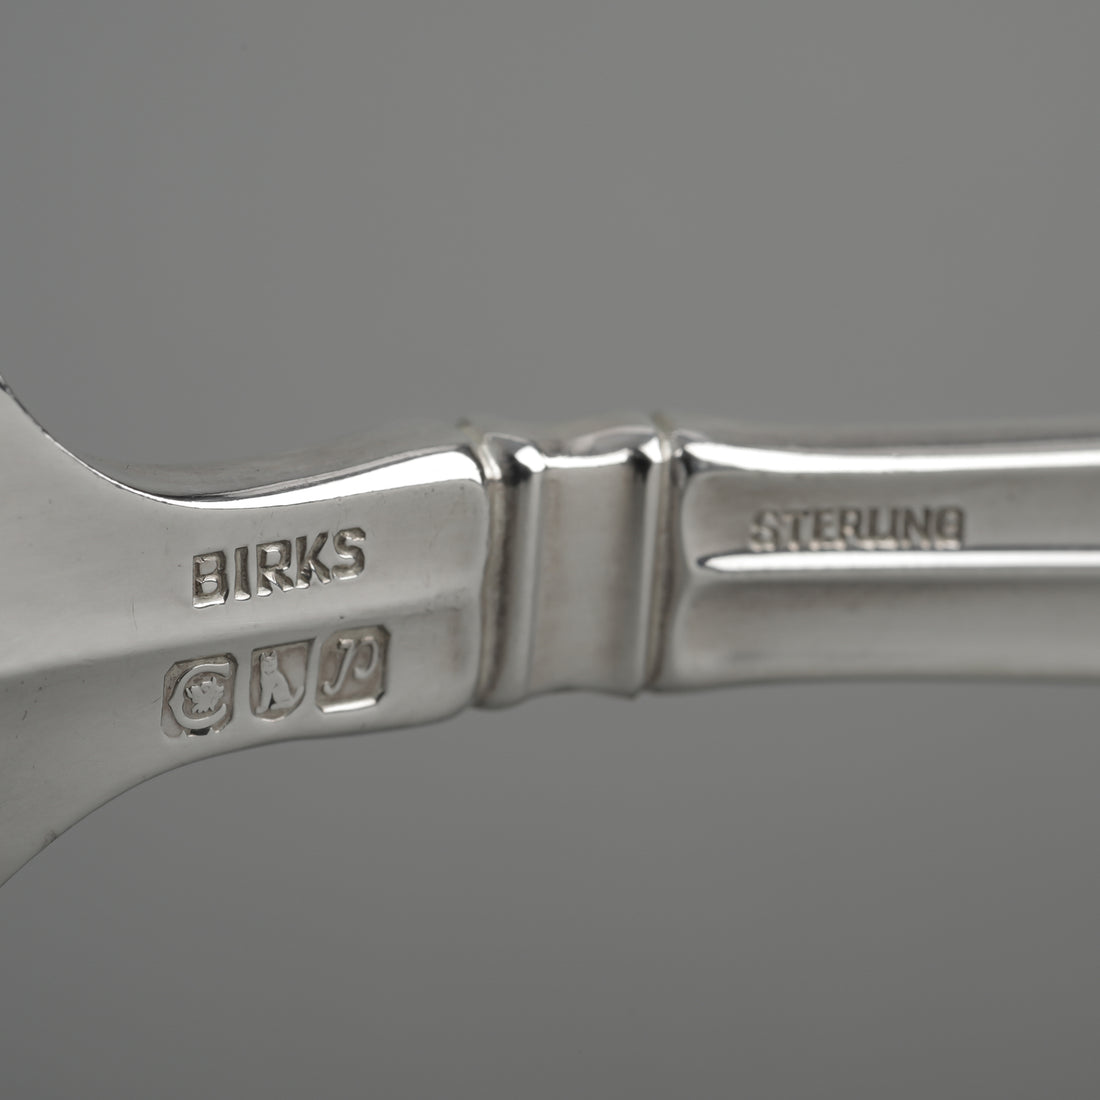 BIRKS George II Engraved Sterling Silver Serving Spoons - Set of 3